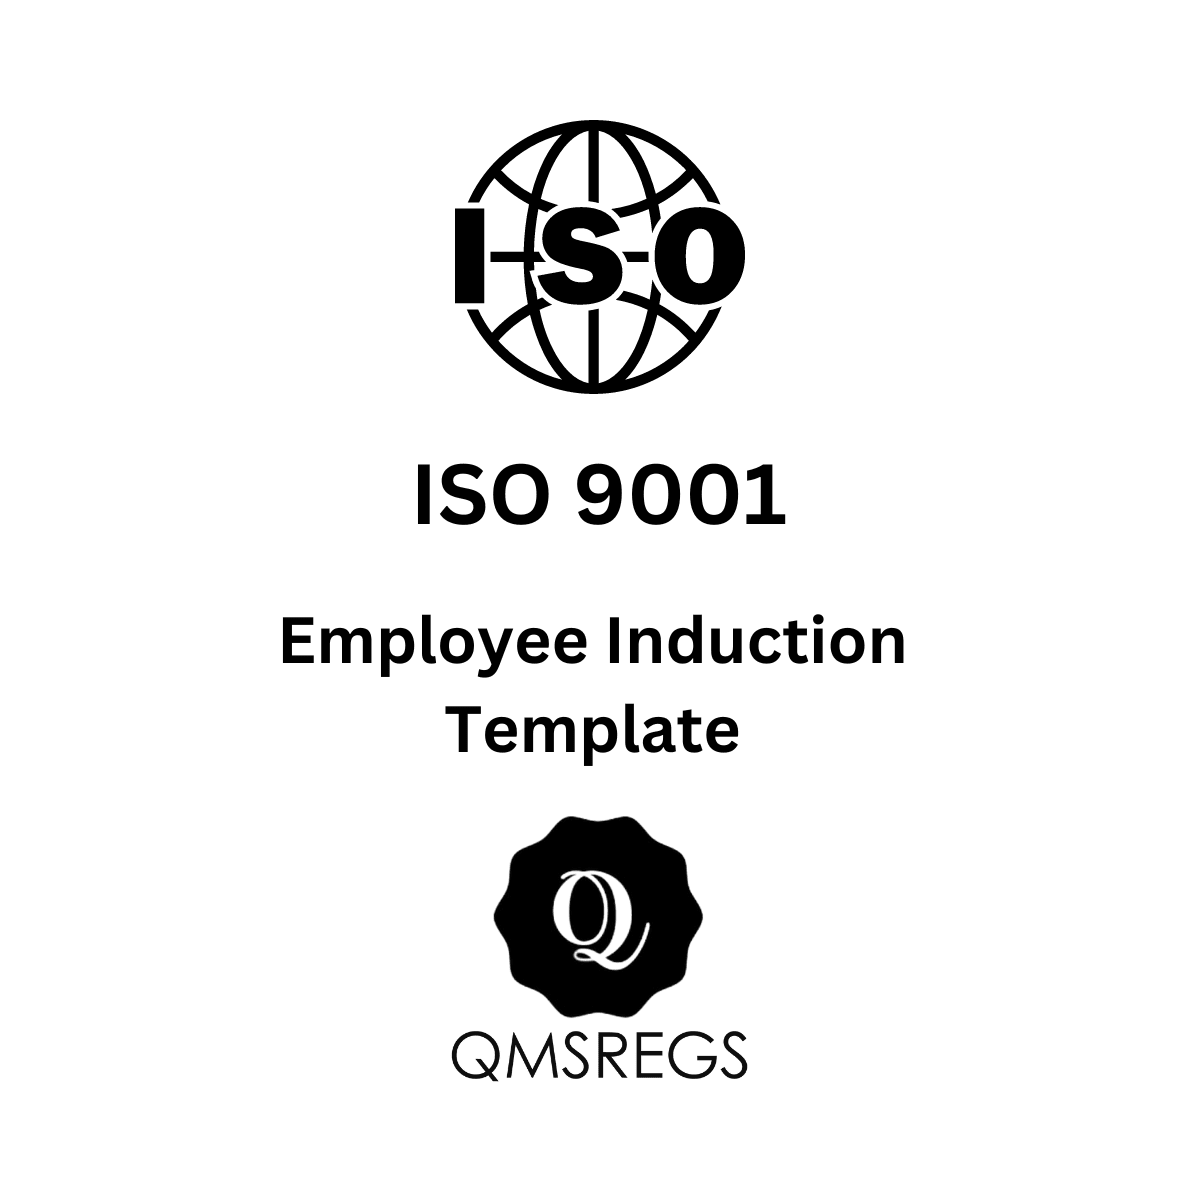 ISO 9001 Employee Induction Template